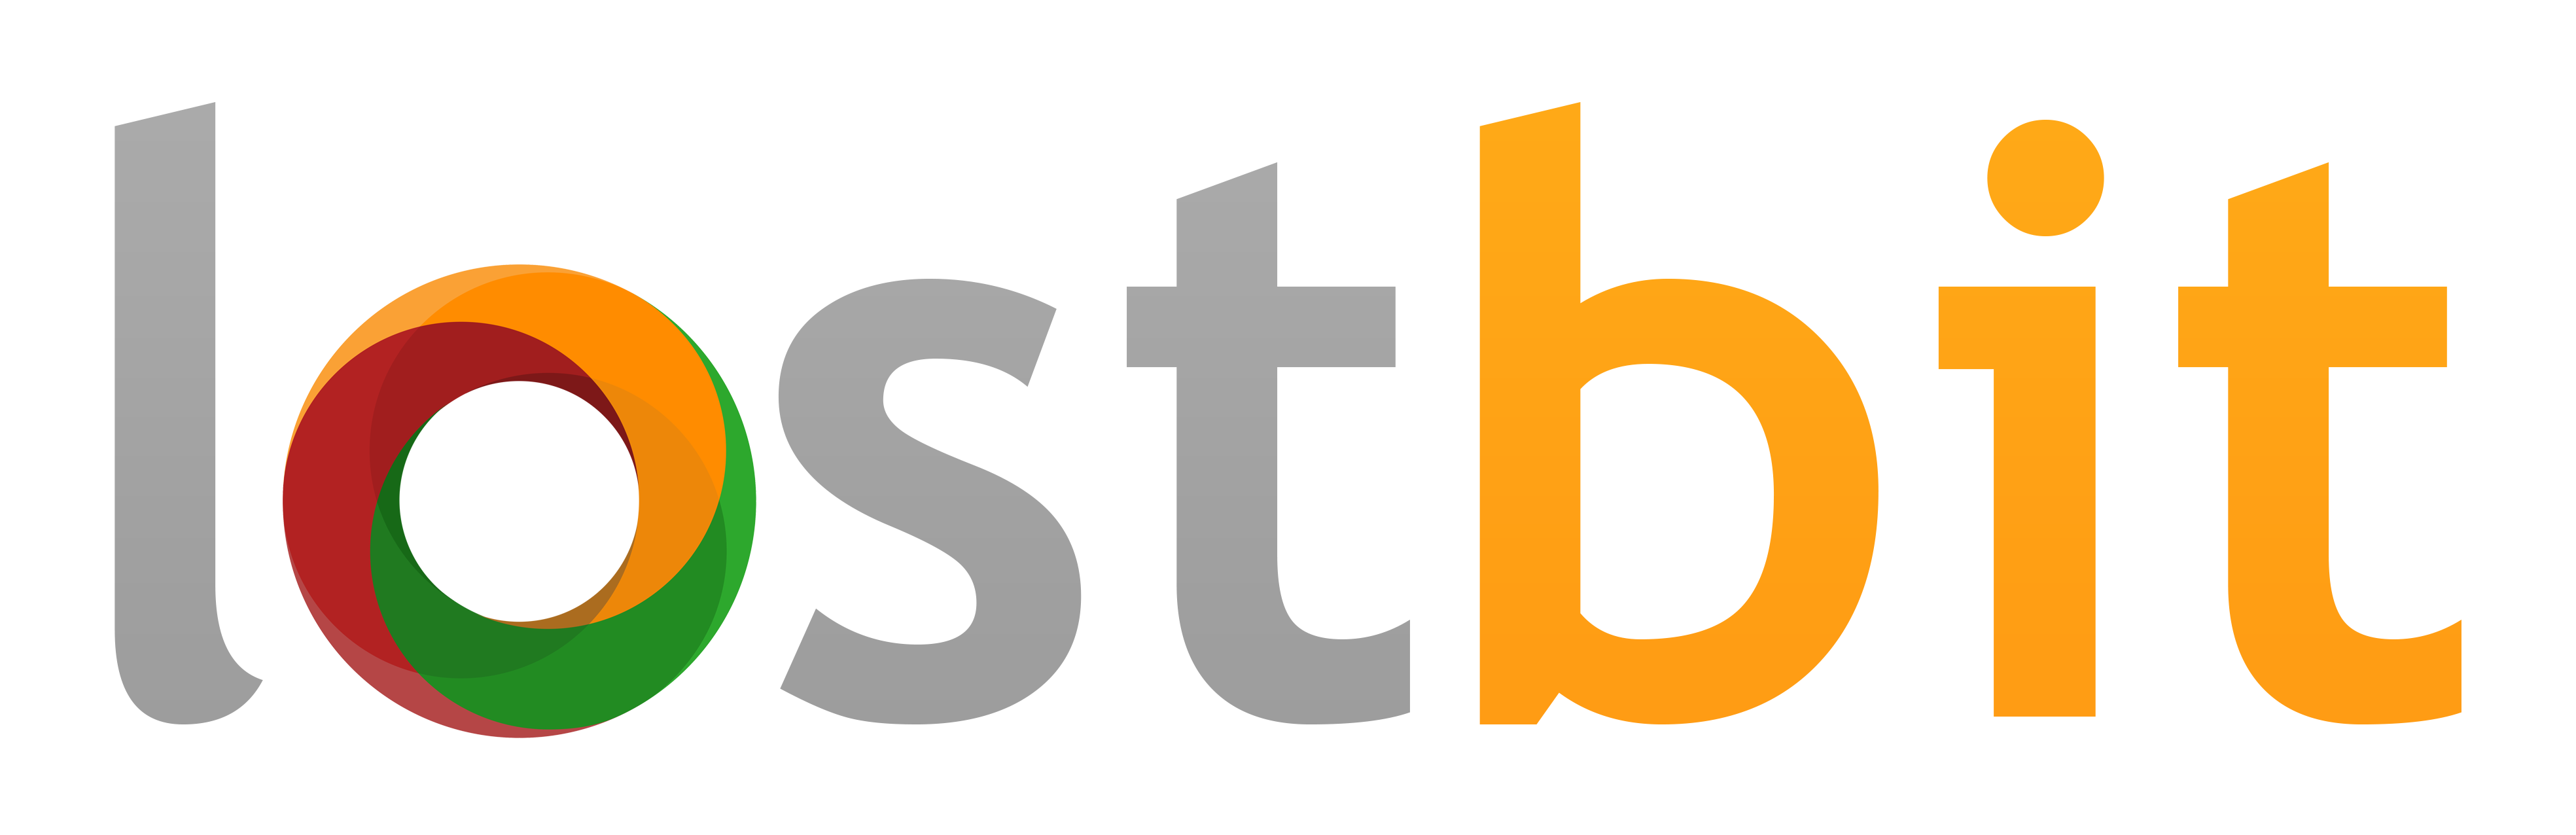 LostBit